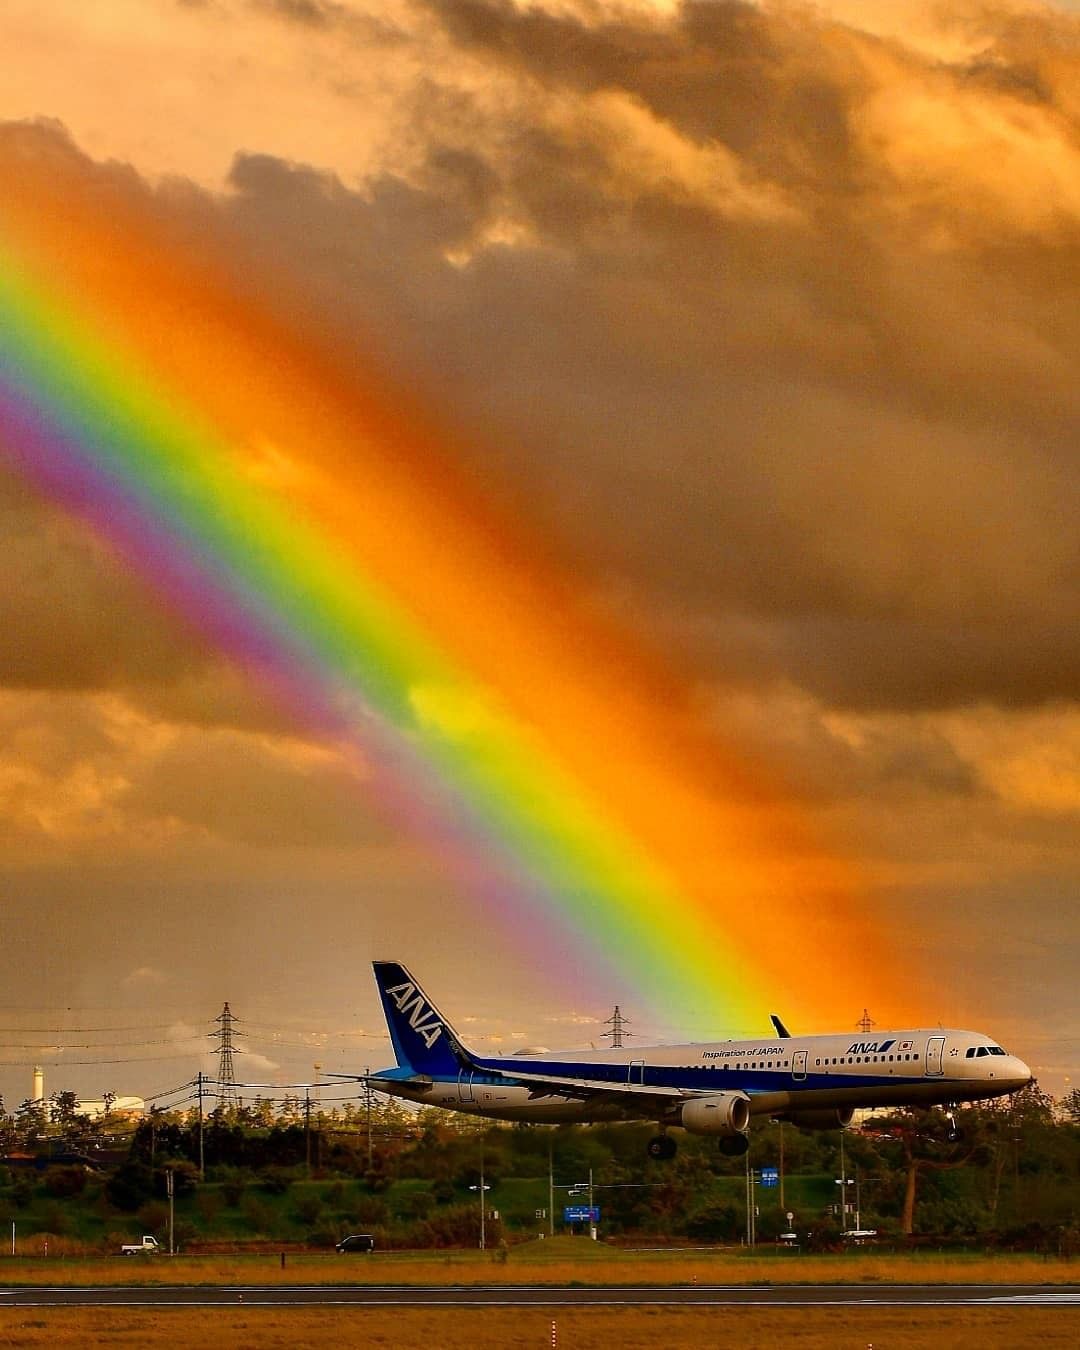 Ana 青い翼に幸せの虹がかかって Photo A Bashibashi 奇跡の瞬間 虹 飛行機 米子鬼太郎空港 空港 飛行機写真 飛行機好きな Wacoca Japan People Life Style